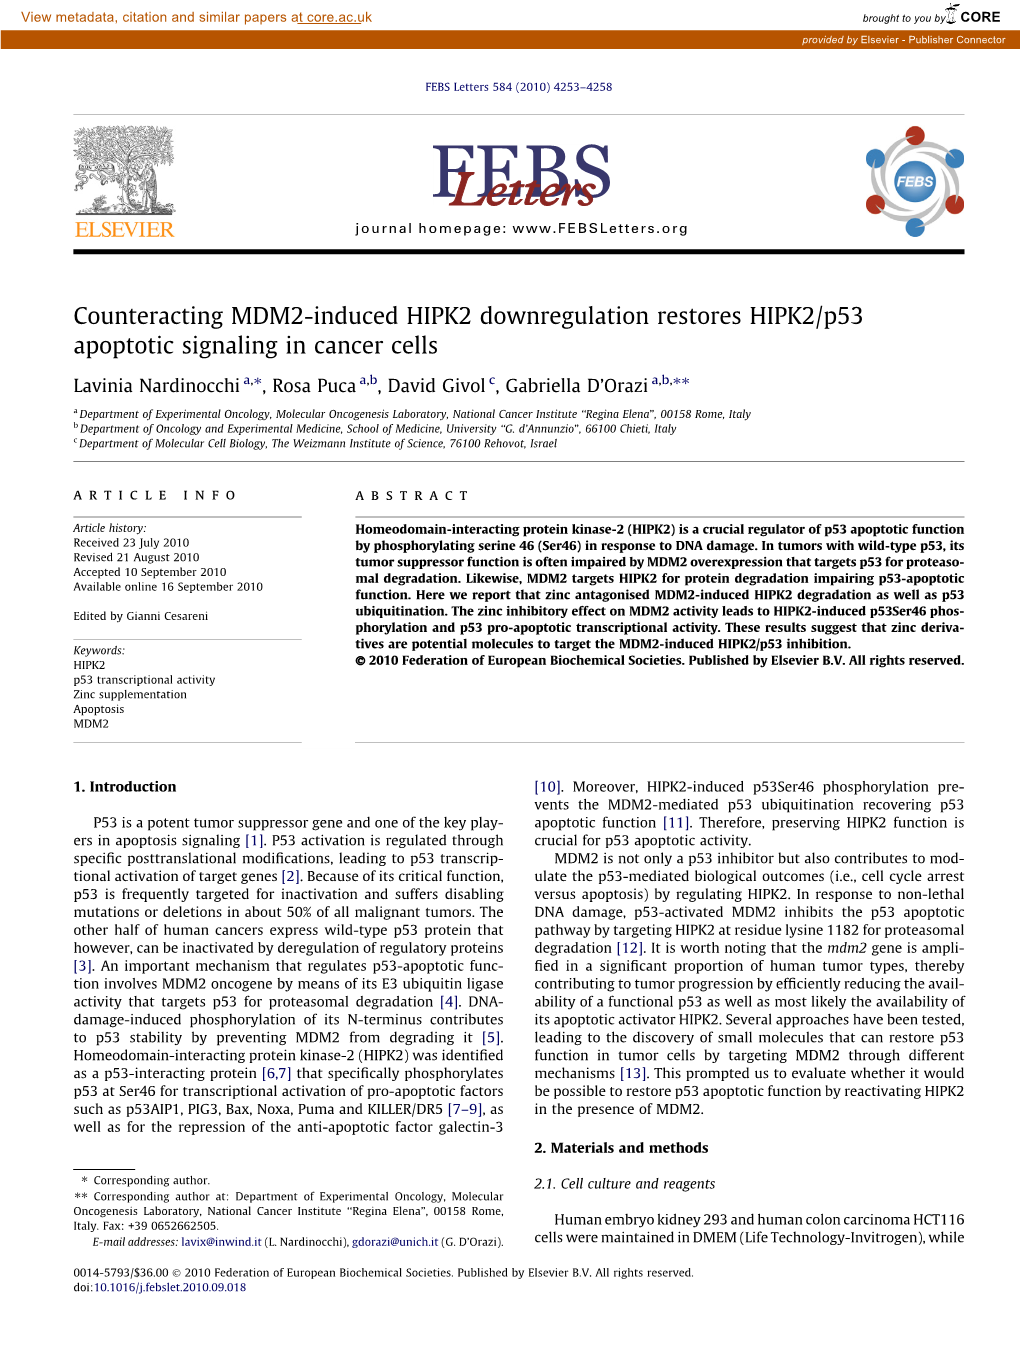 Counteracting MDM2-Induced HIPK2 Downregulation Restores HIPK2/P53